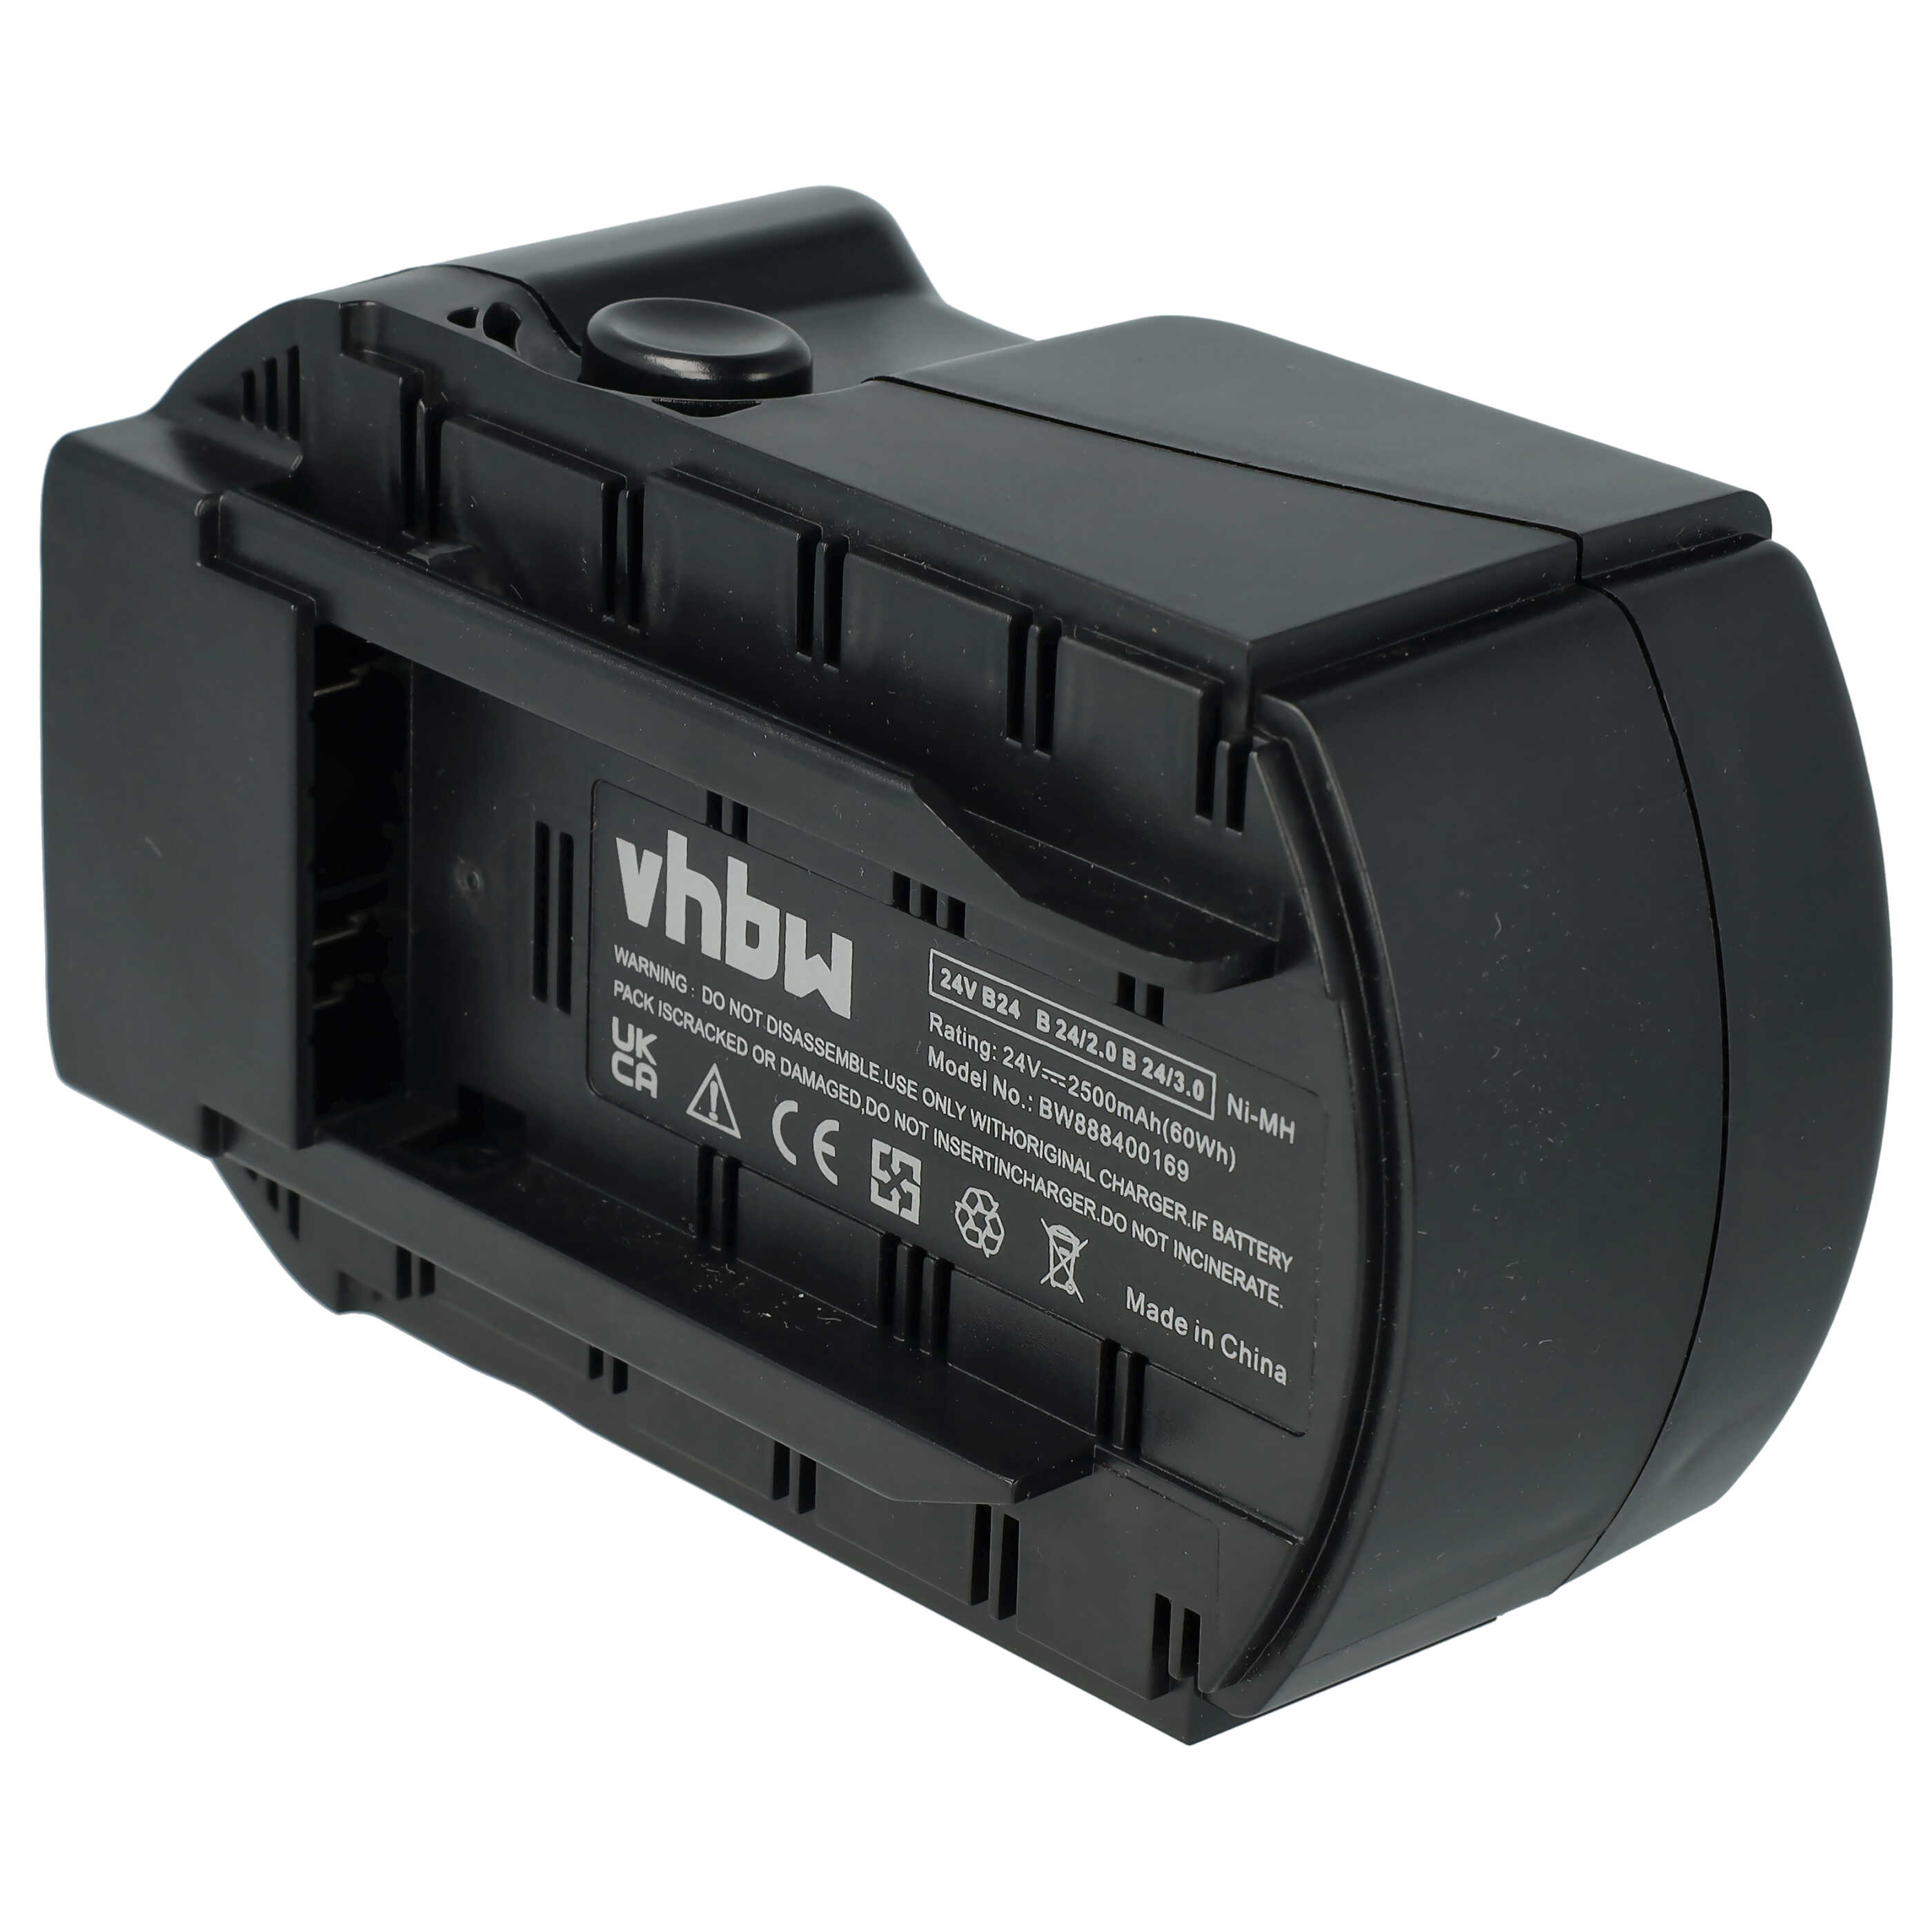 Batería reemplaza Hilti B24/3.0, B24/2.0, B24 para herramienta - 2500 mAh, 24 V, NiMH